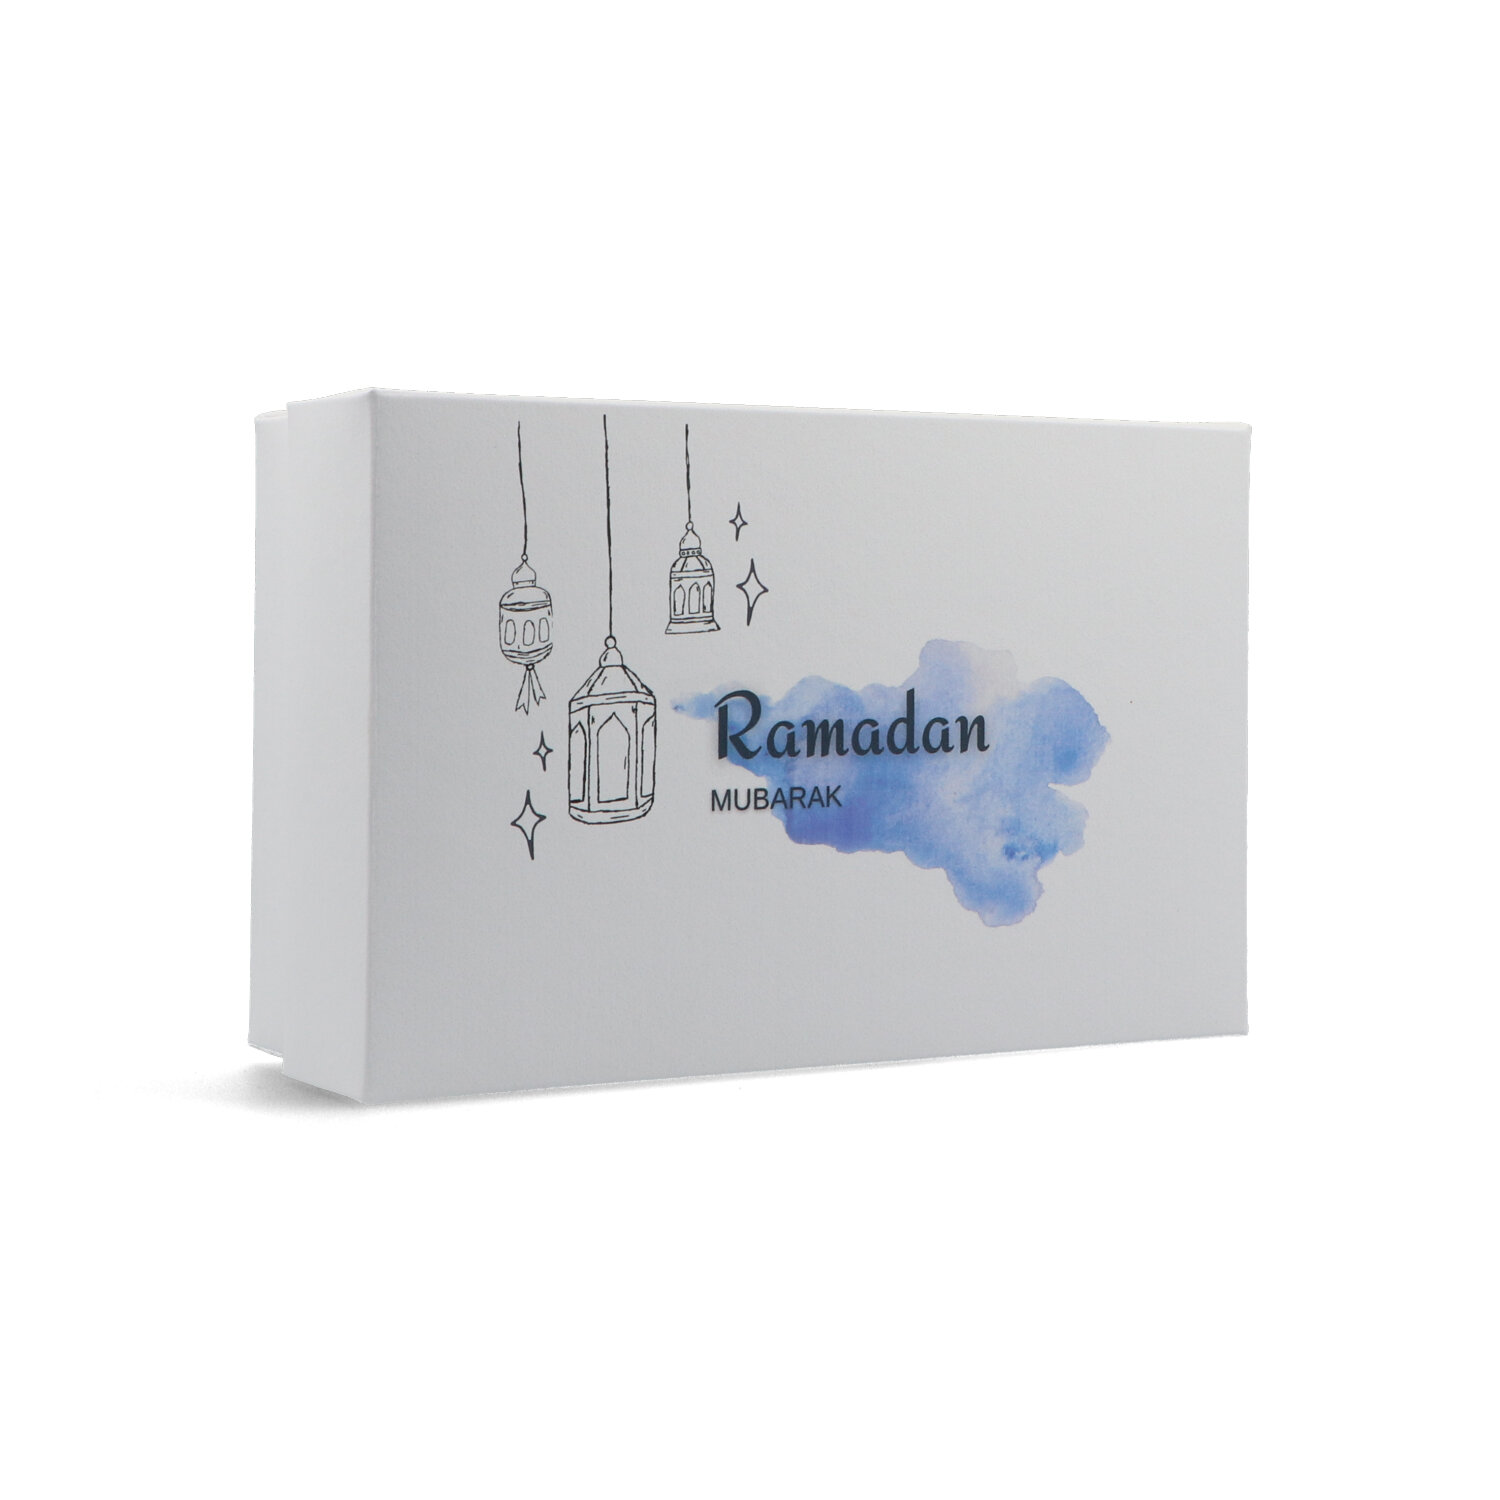 Buntbox Ramadan Mubarak